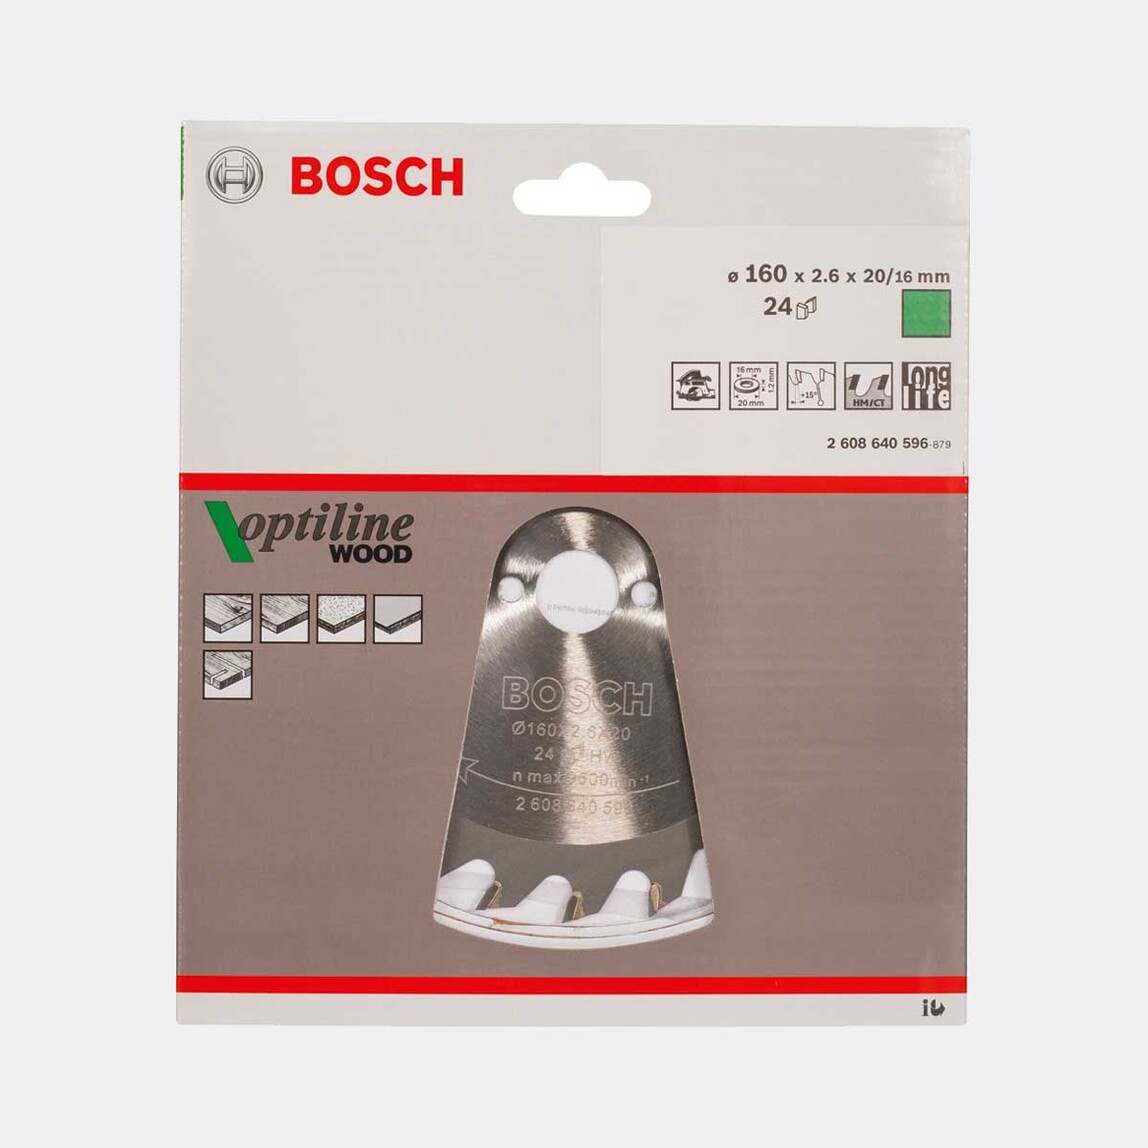    Bosch Optiline Daire Testere Bıçağı   160X16 mm  24 Diş  